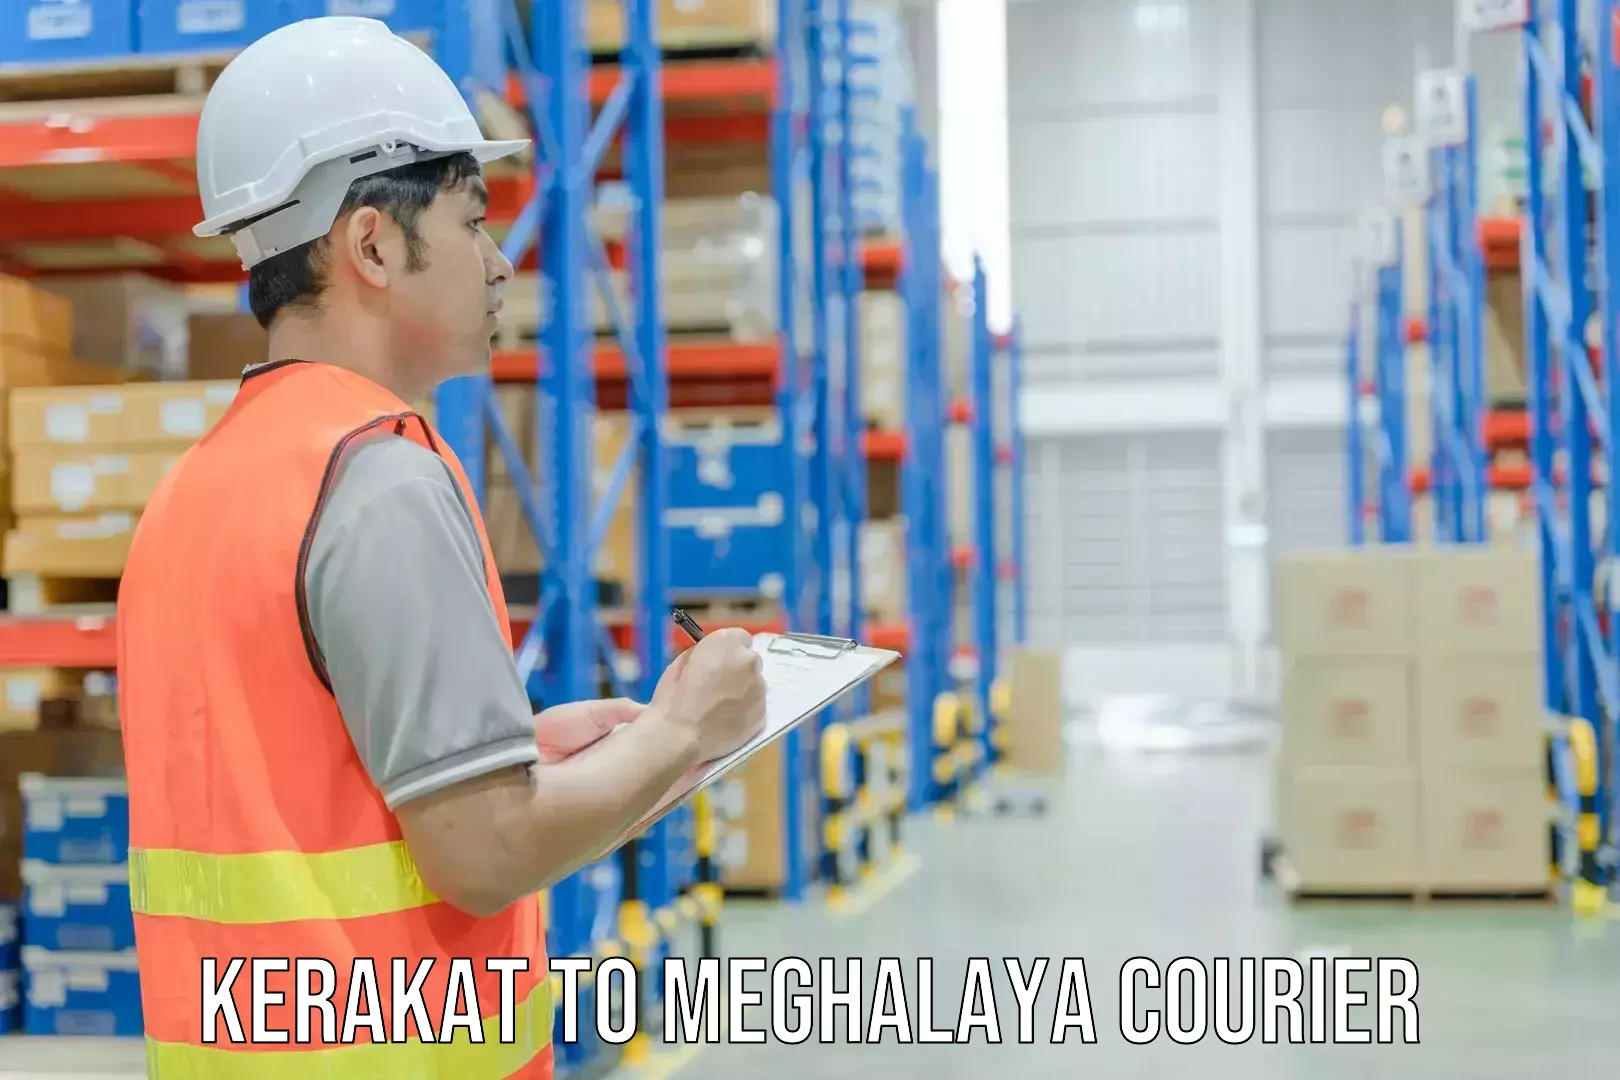 Specialized shipment handling Kerakat to Meghalaya